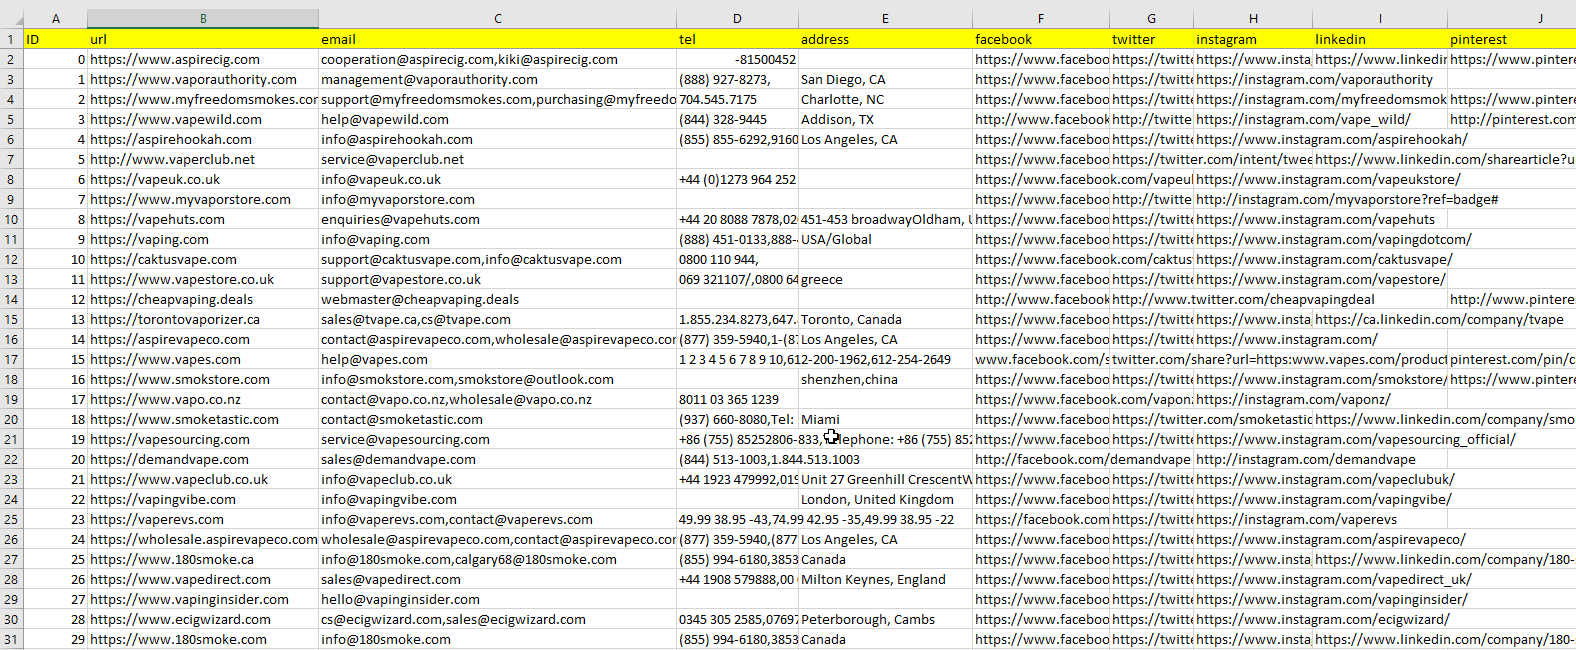 Sample Screenshot of the Global Vape Shop Database